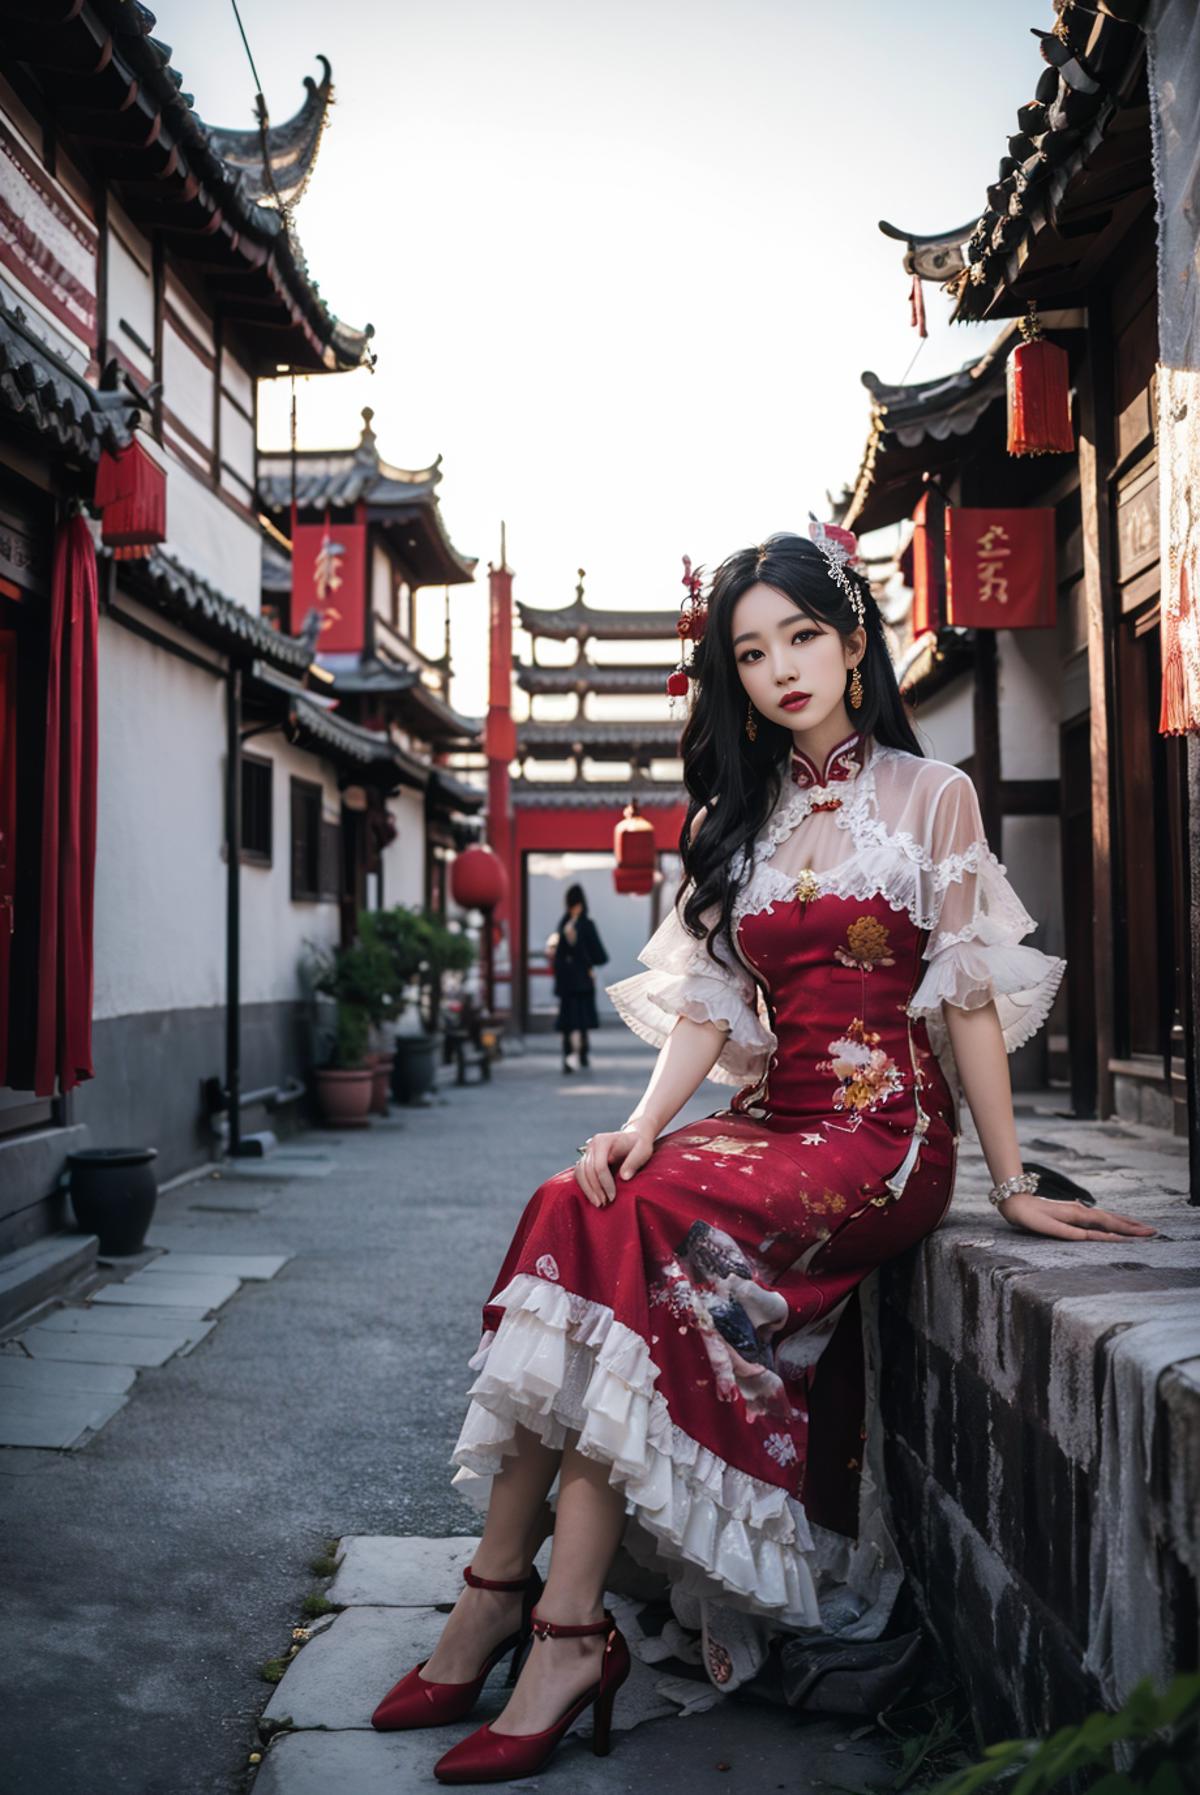 New Chinese-style clothing | 新中式服装 vol.1 image by cyberAngel_